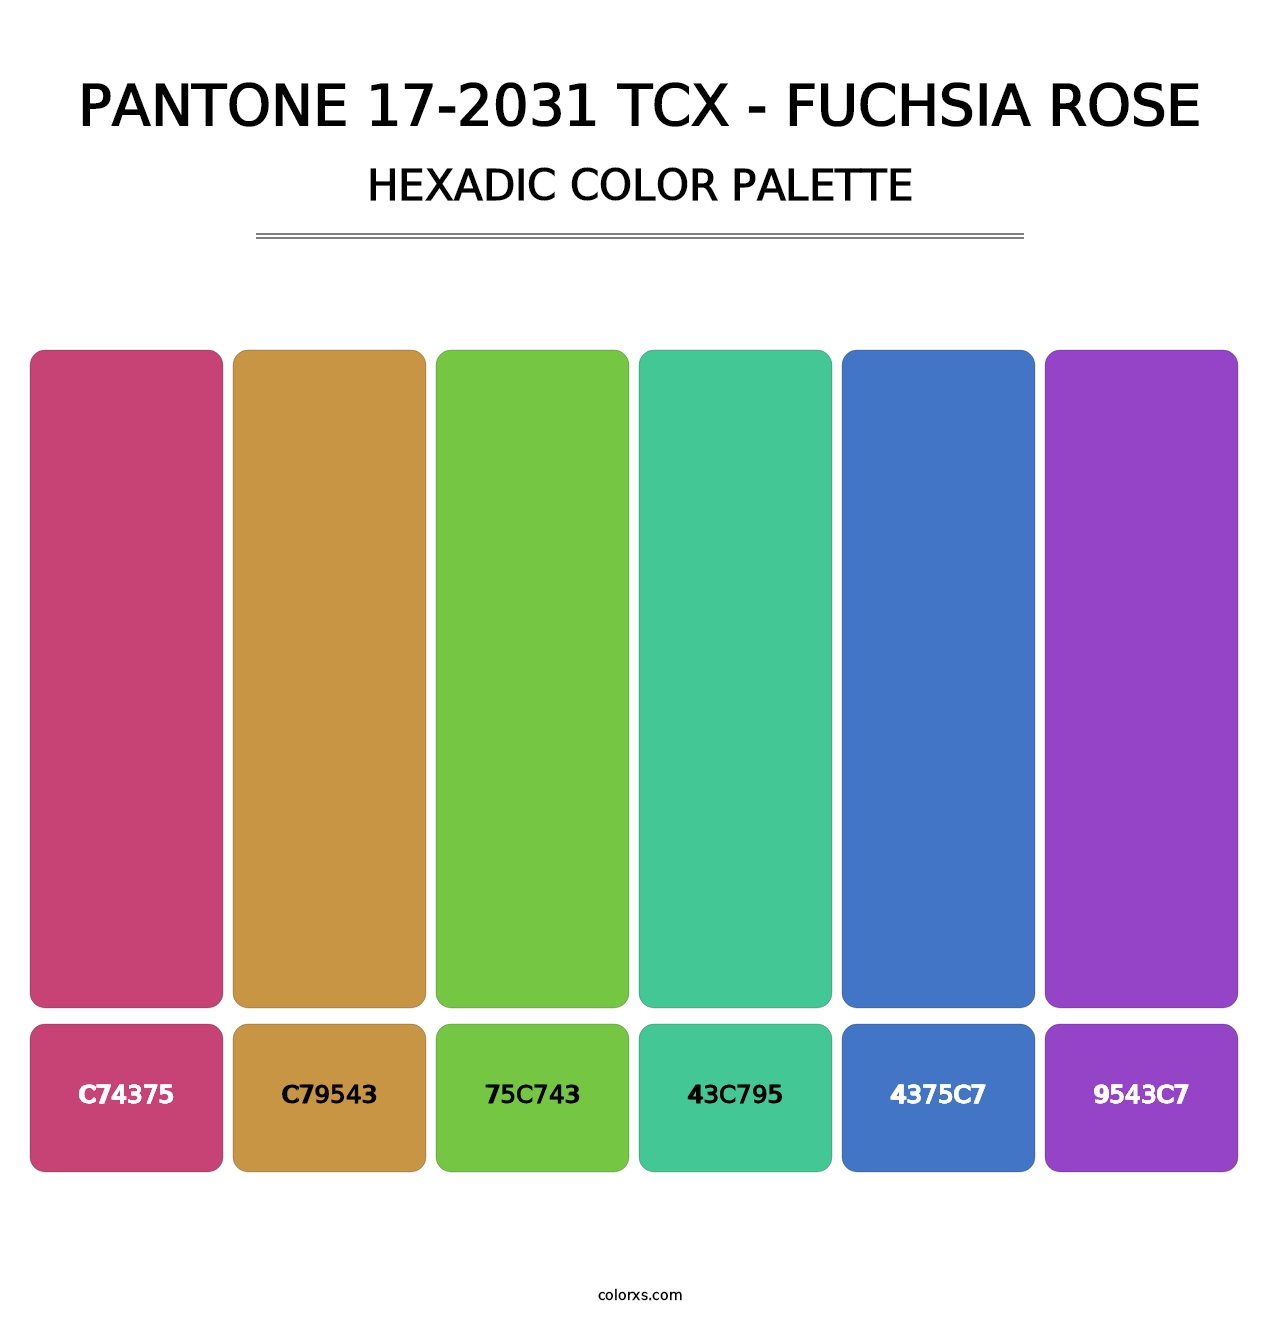 PANTONE 17-2031 TCX - Fuchsia Rose - Hexadic Color Palette